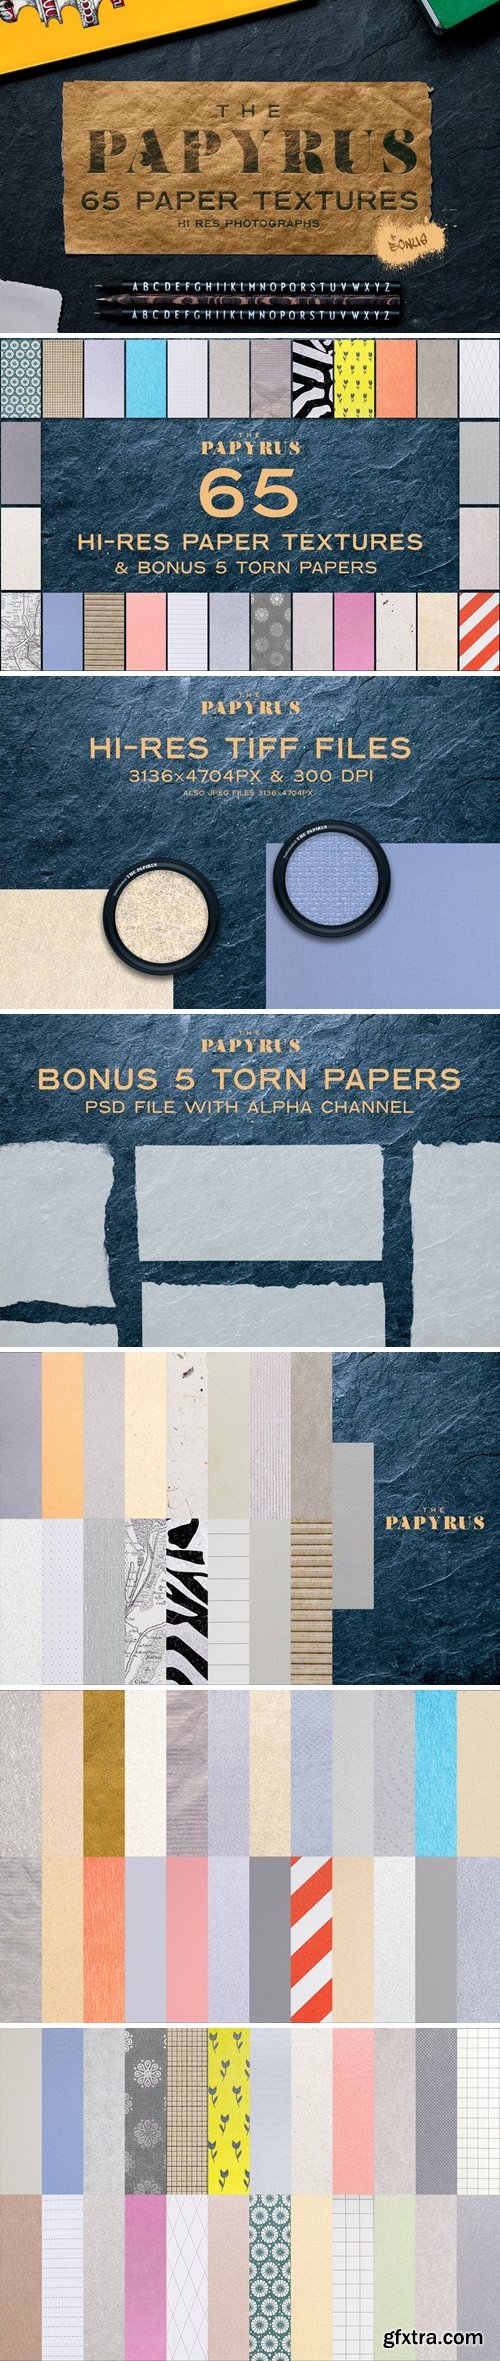 CreativeMarket - The Papyrus - 65 Paper Textures 4930218